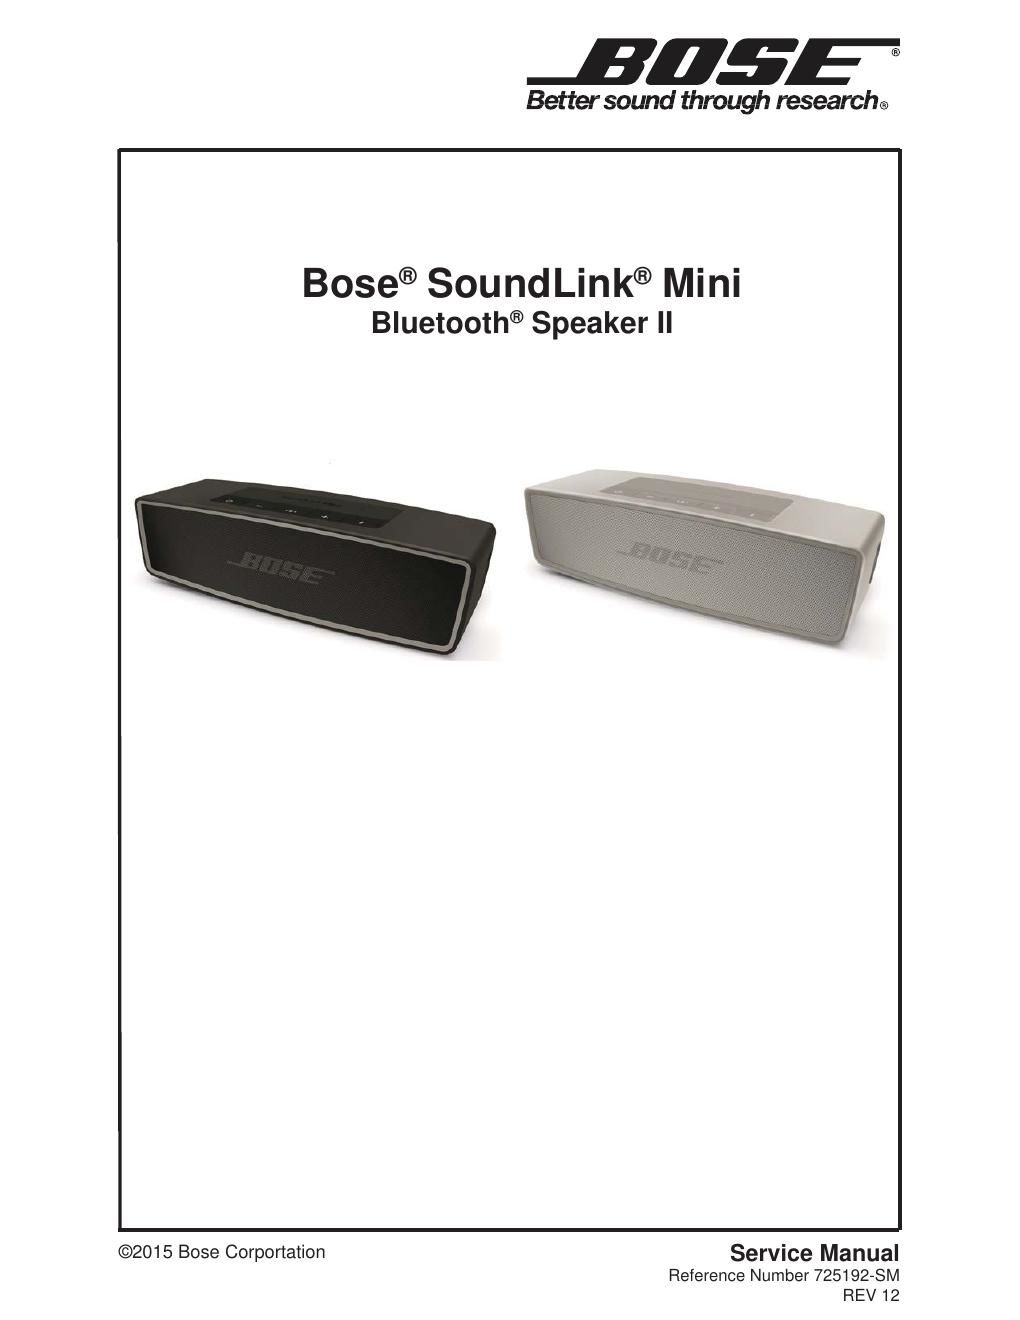 Audio Service Manuals - download bose soundlink mini 9364327